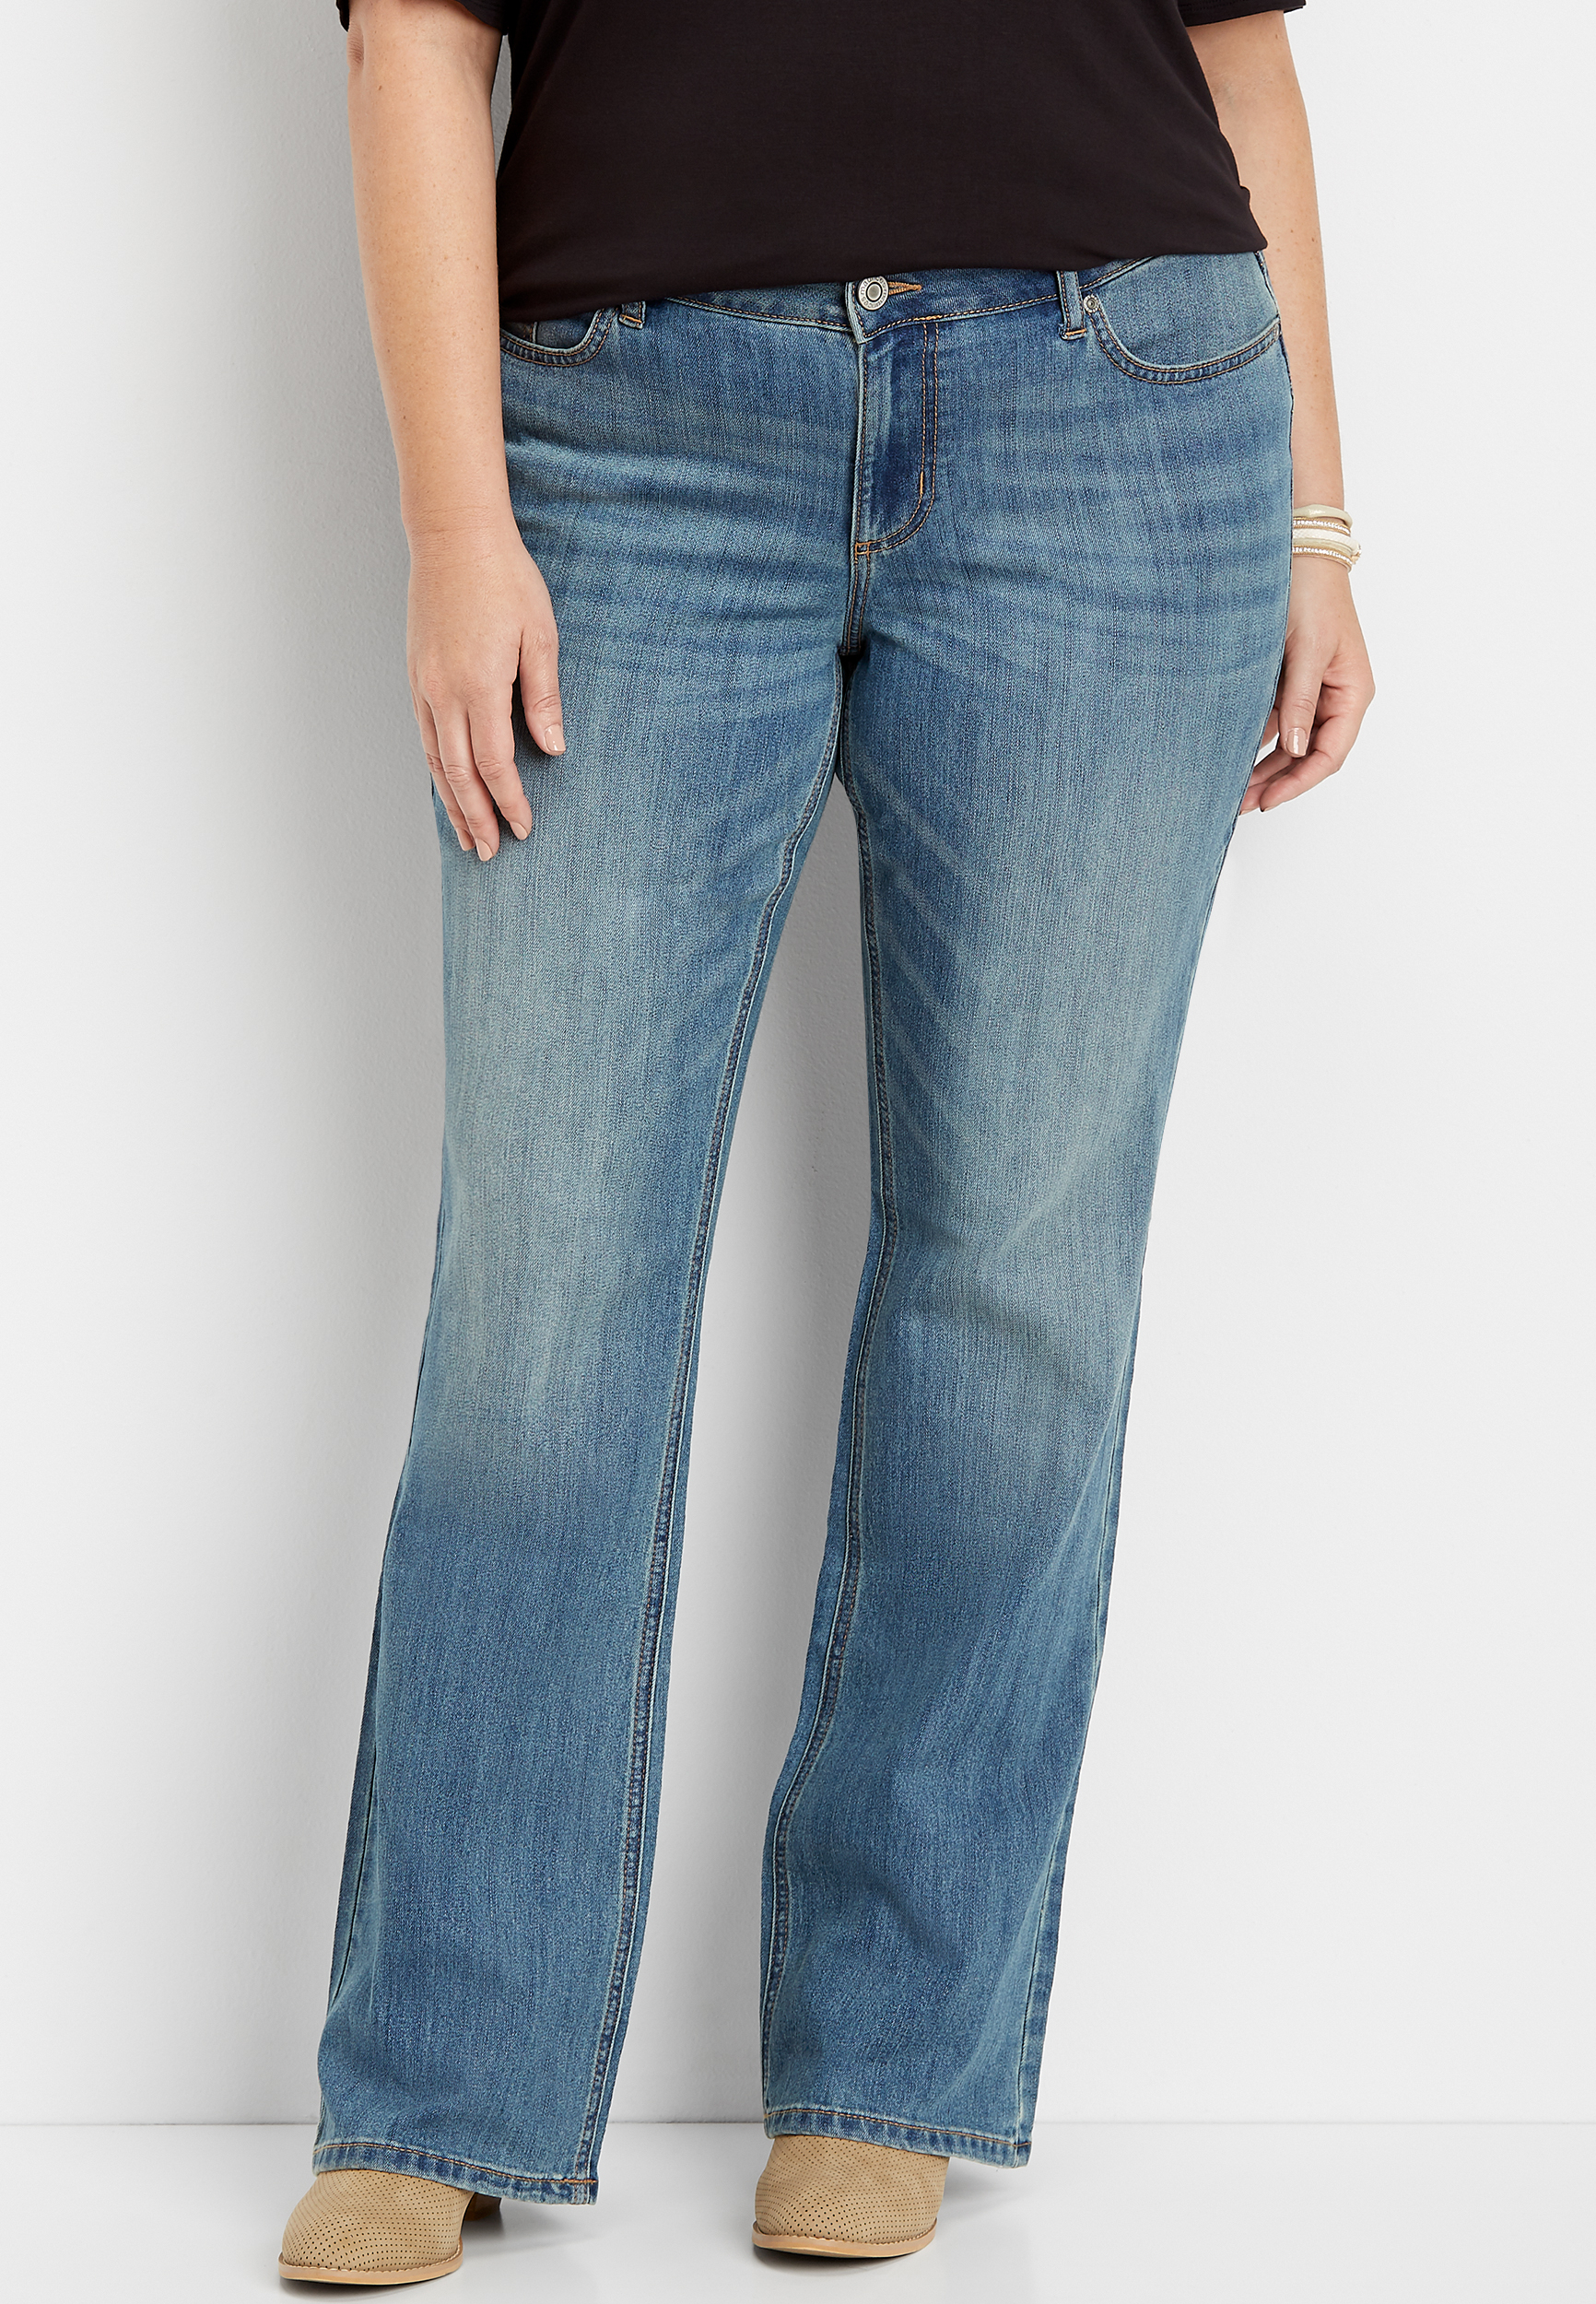 medium jeans size